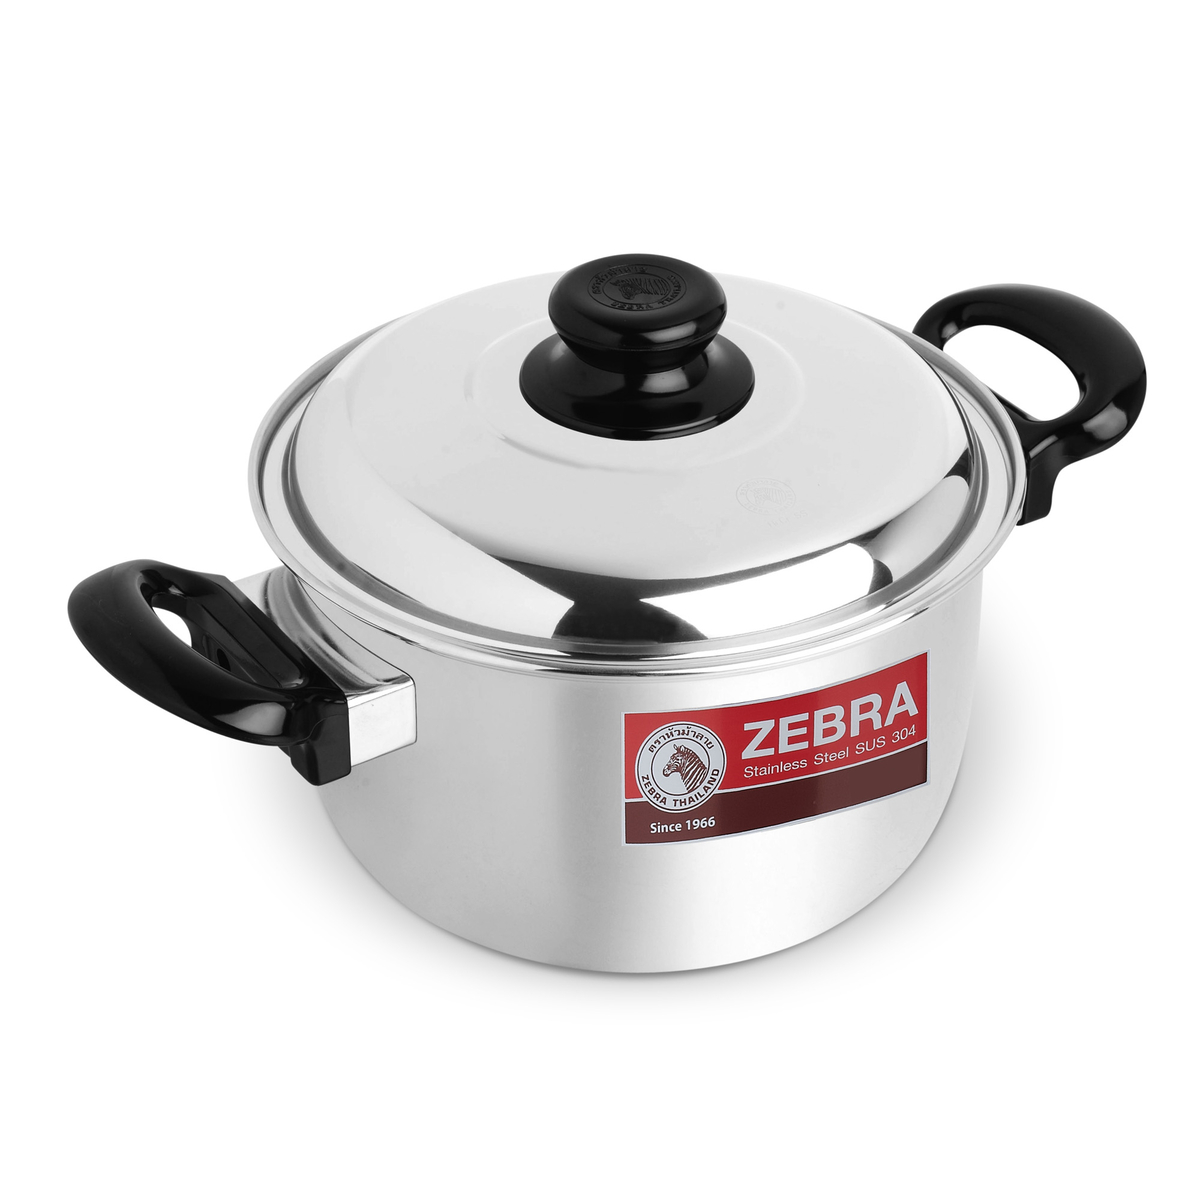 Zebra Stainless Steel Sauce Pot, 28 cm, 160515